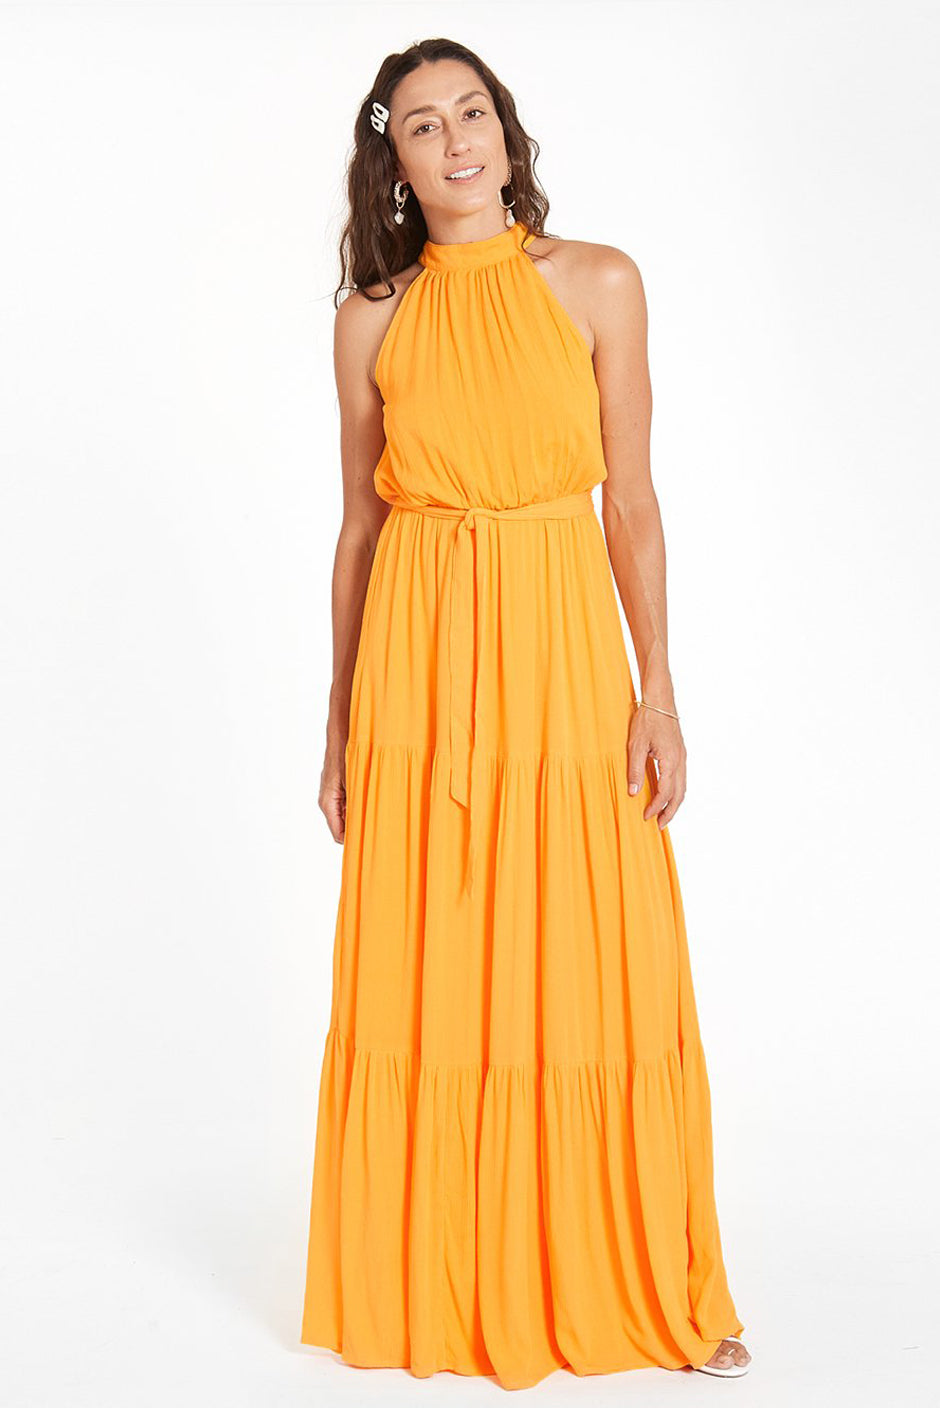 Mango Marsella Halter Neck Flowy Maxi Dress, Yellow, 6